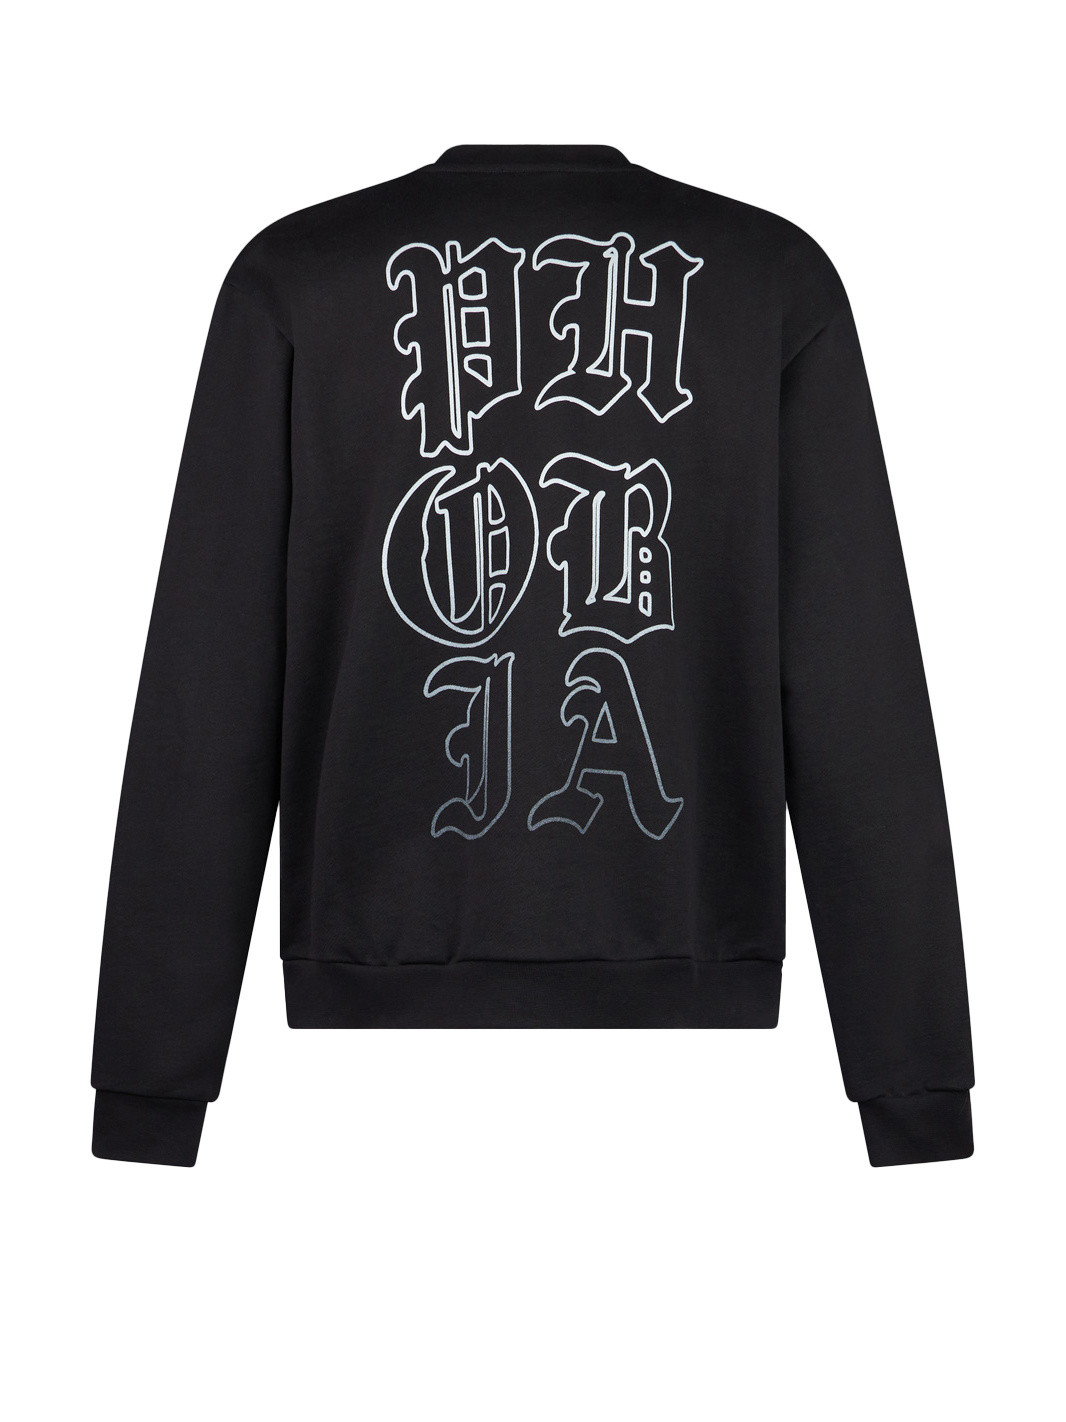 Phobia - Cotton sweatshirt with bite print, Black, large image number 3